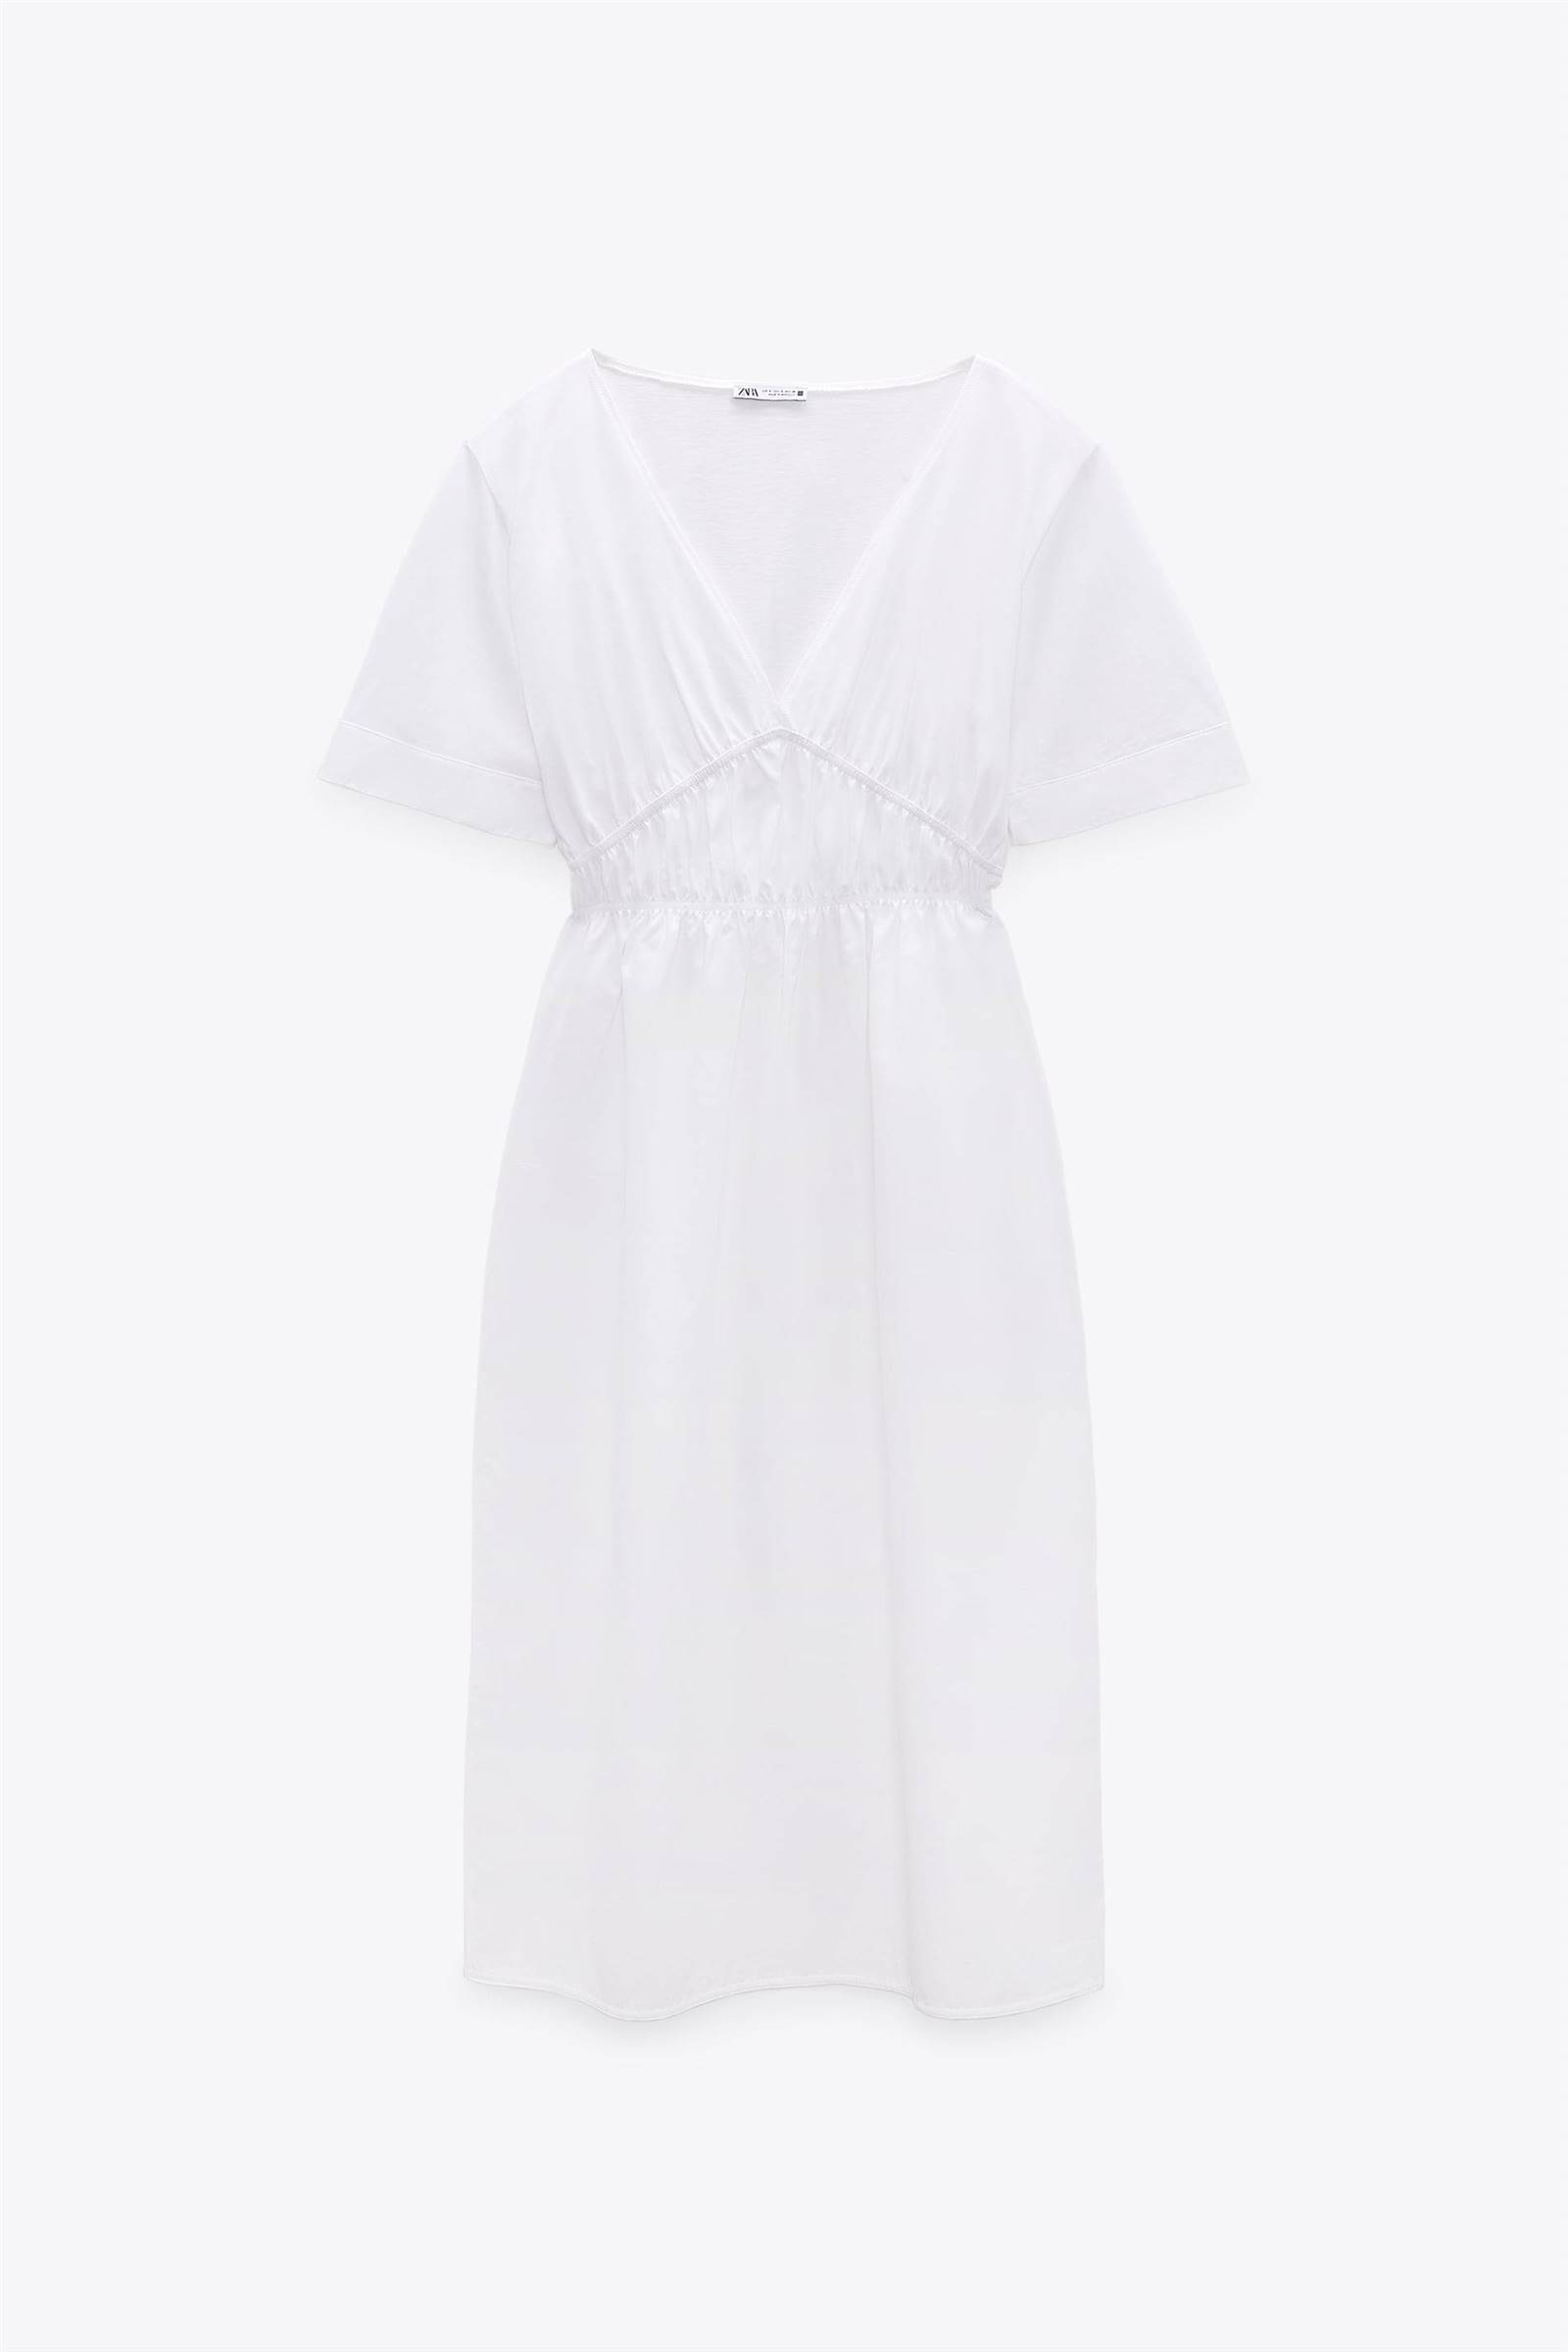 Vestido blanco popelín de Zara